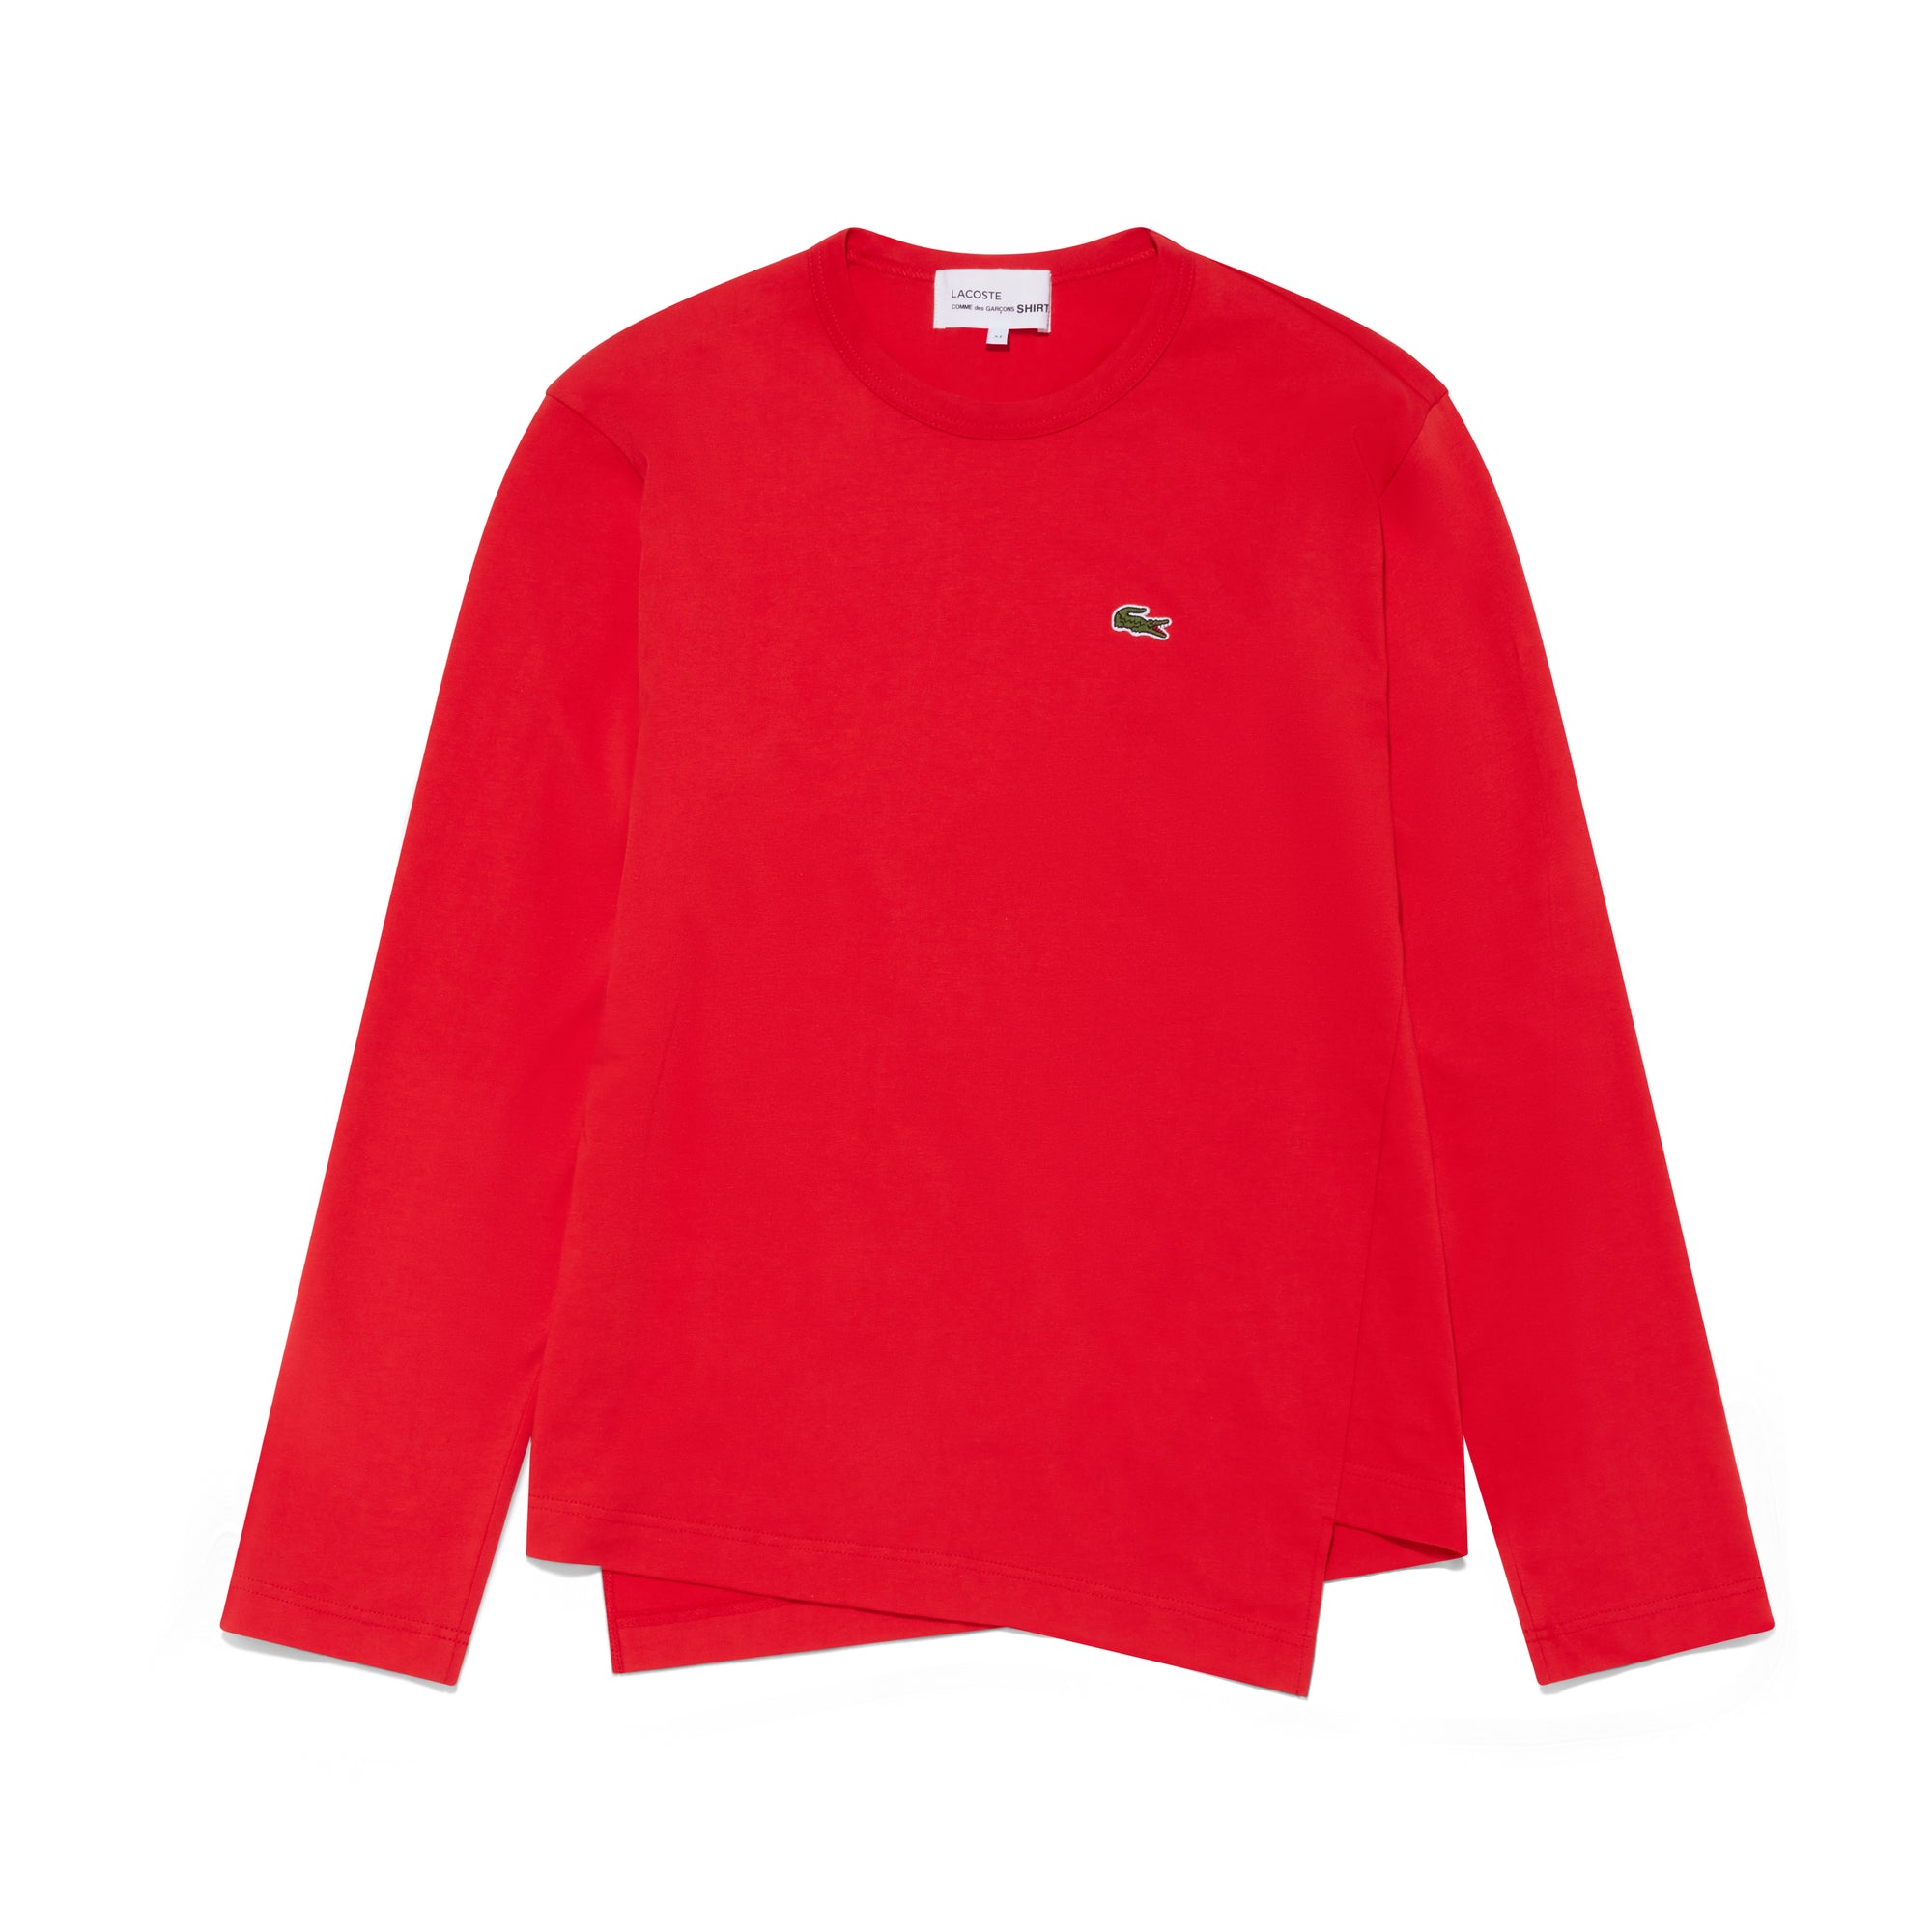 CDG Shirt - Lacoste Men’s Long Sleeve T-Shirt - (Red) view 5